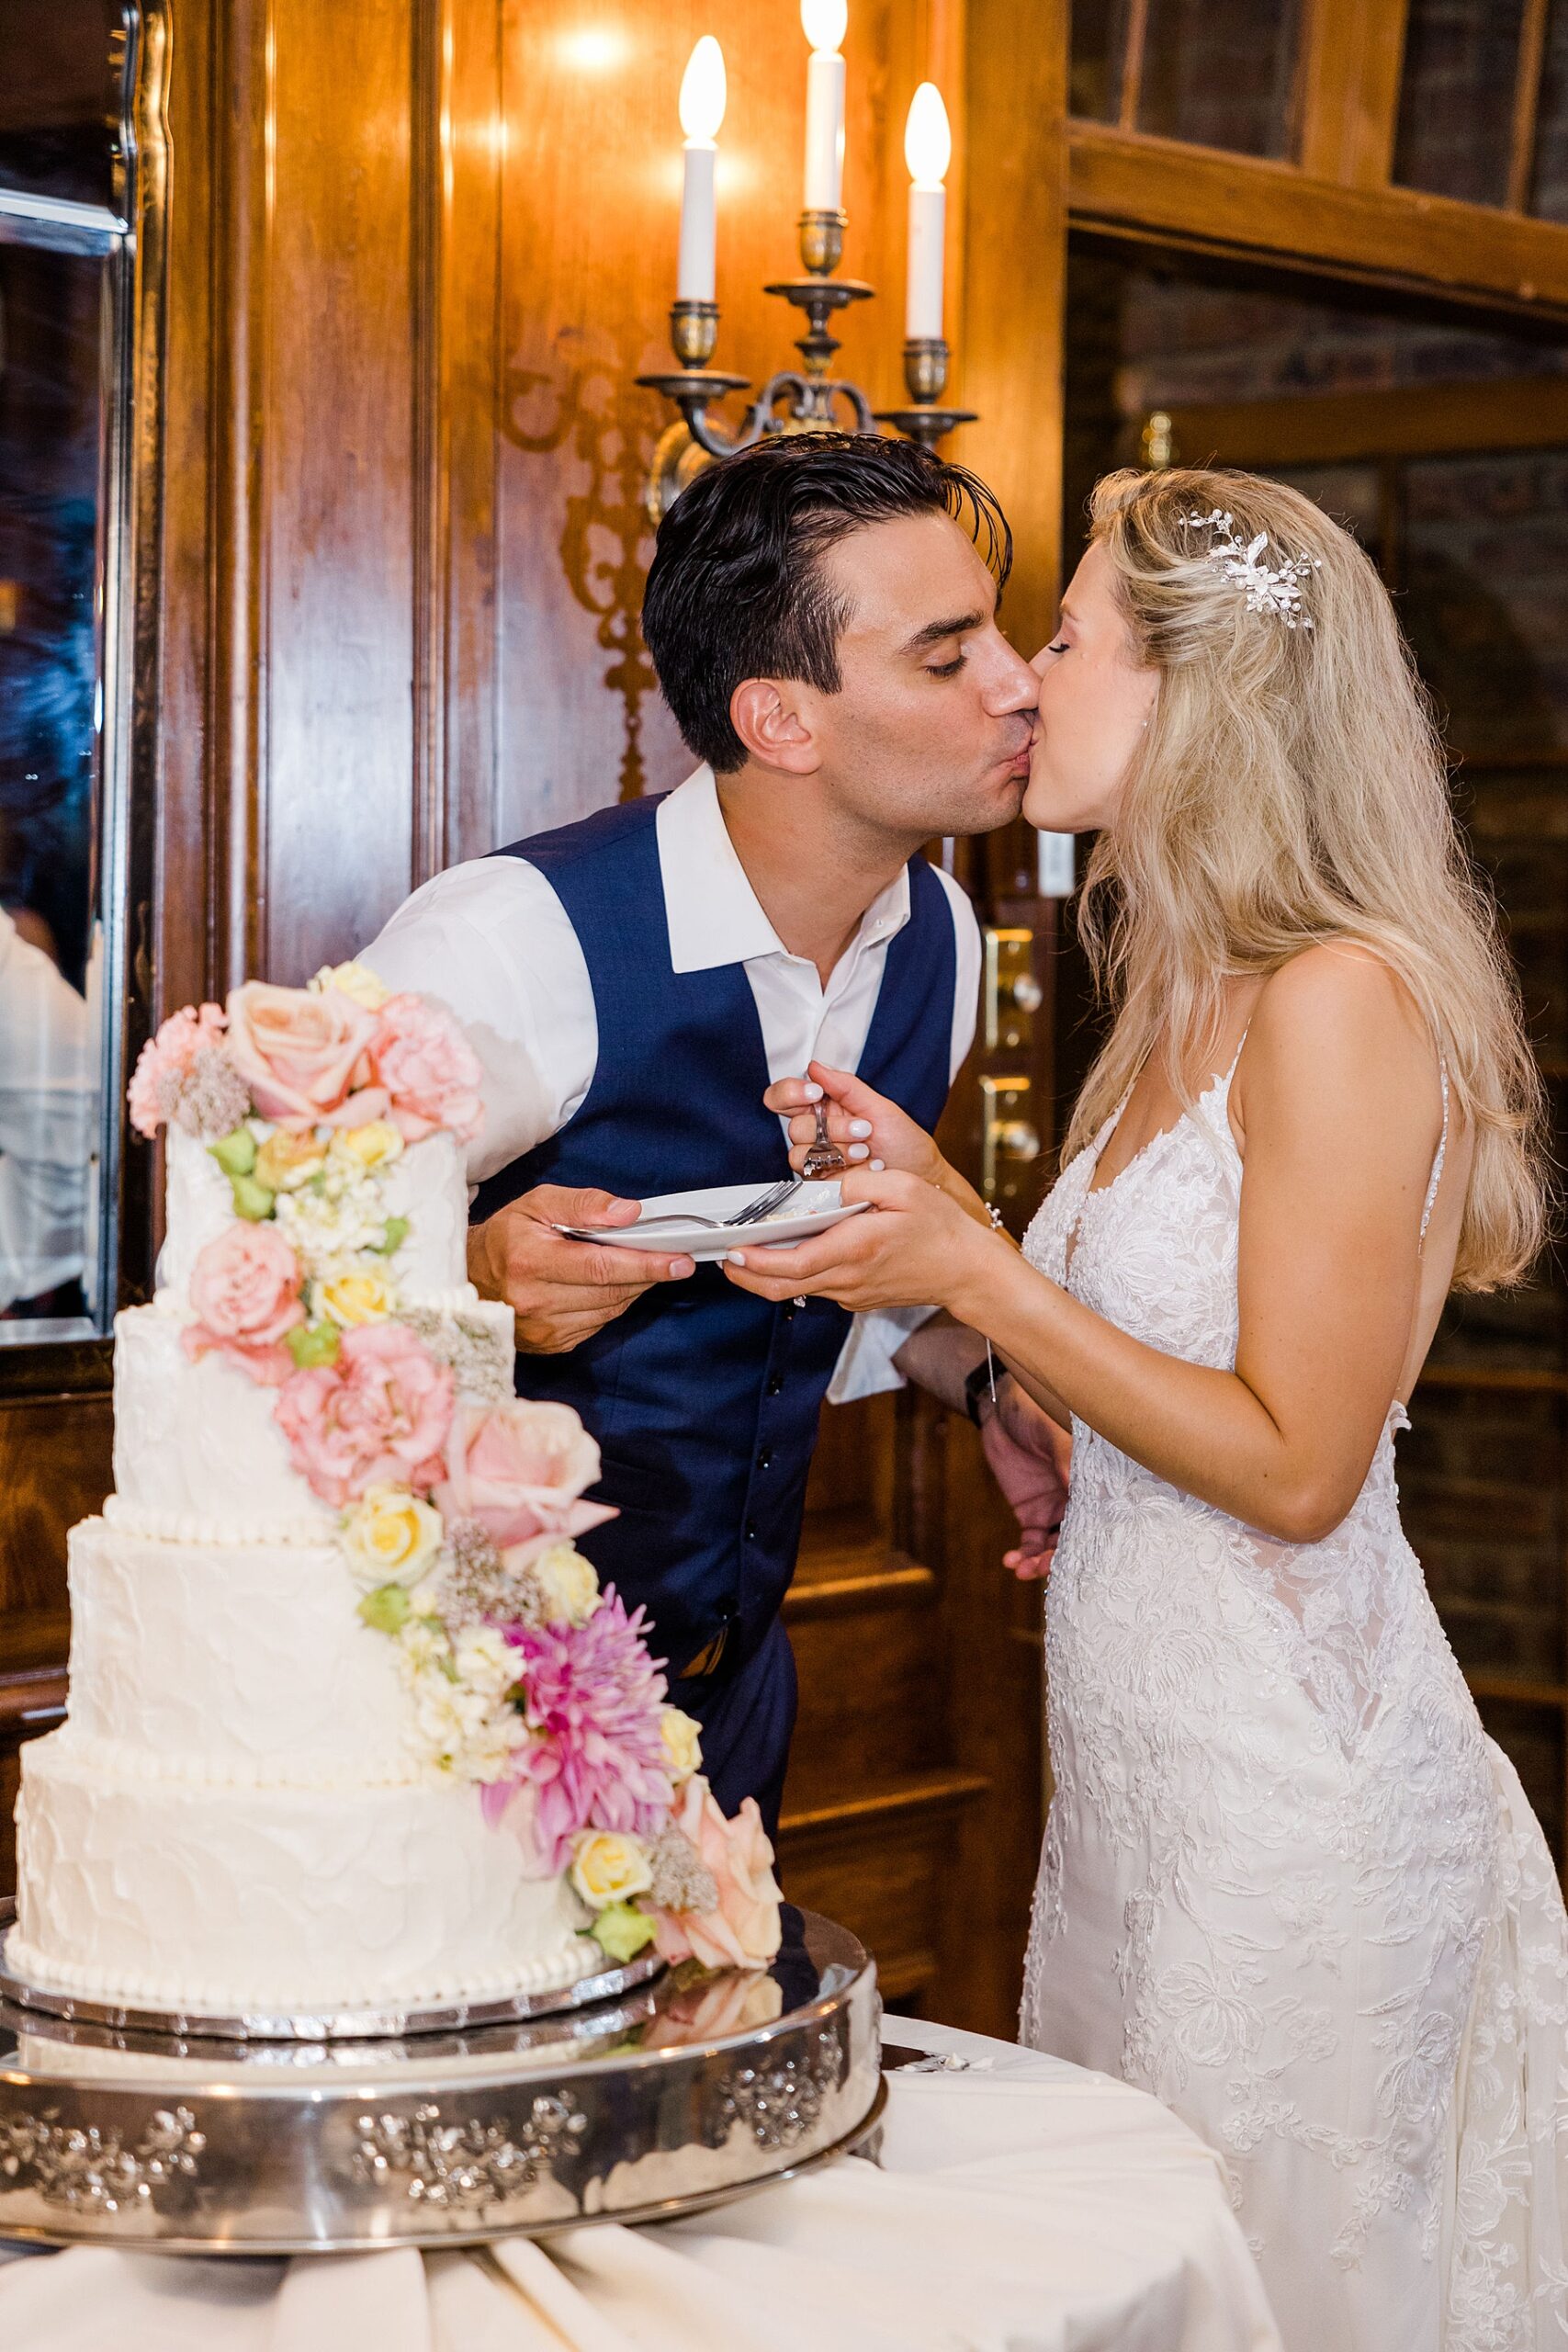 newlyweds kiss by wedding cake 